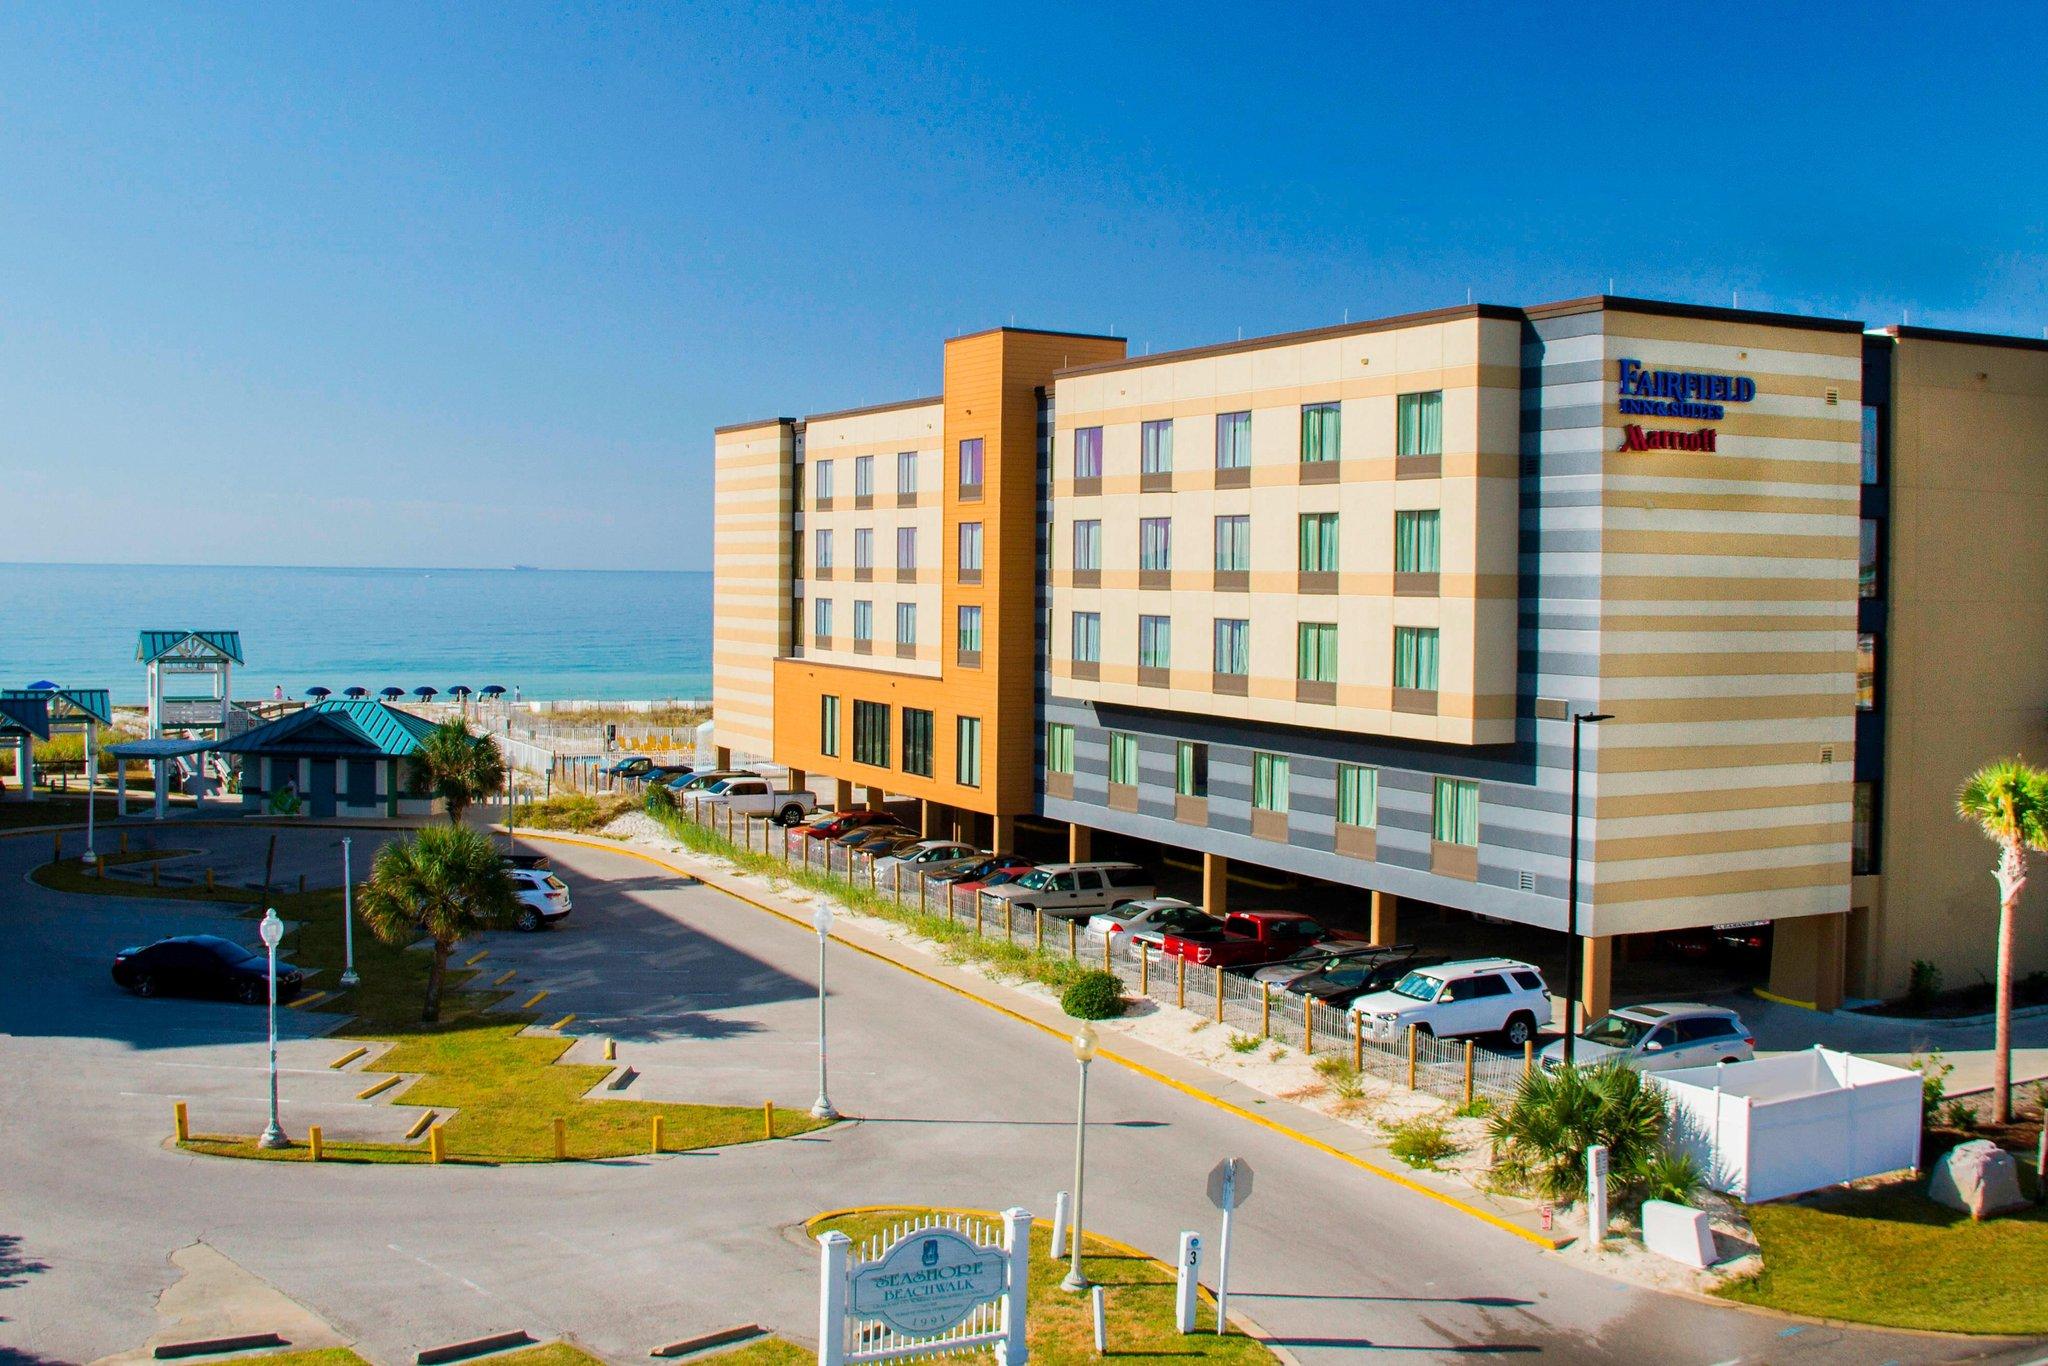 Fairfield Inn & Suites Fort Walton Beach-West Destin in Fort Walton Beach, FL